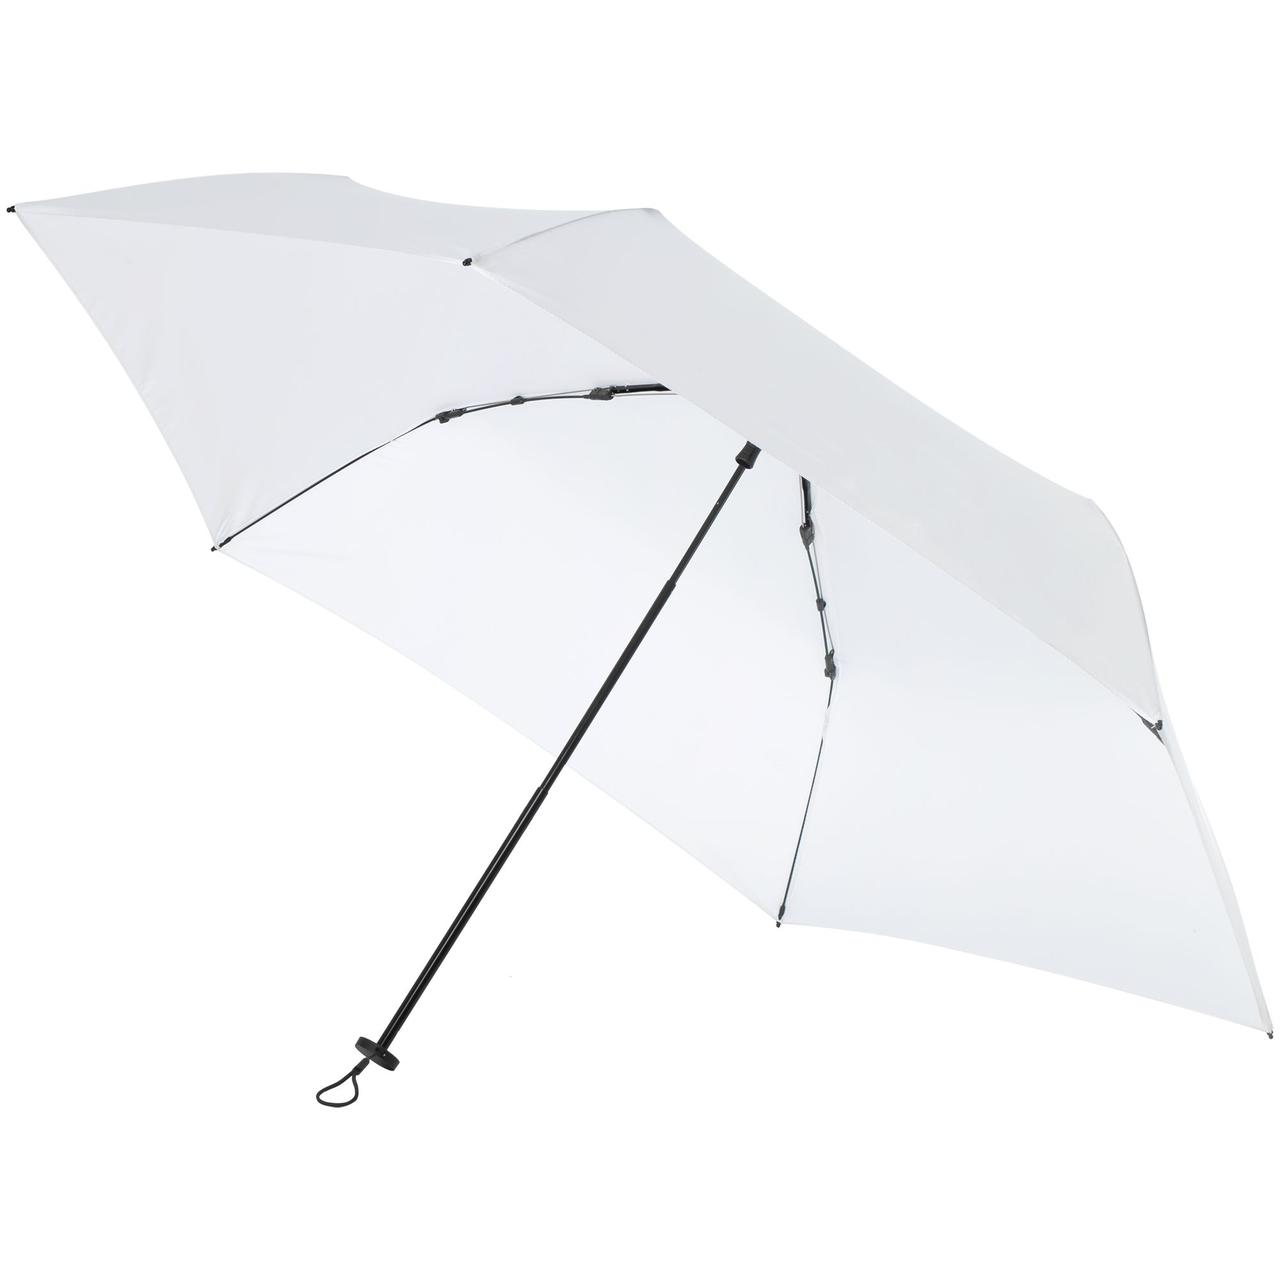 Зонт складной Luft Trek, белый (артикул 15056.60), фото 1